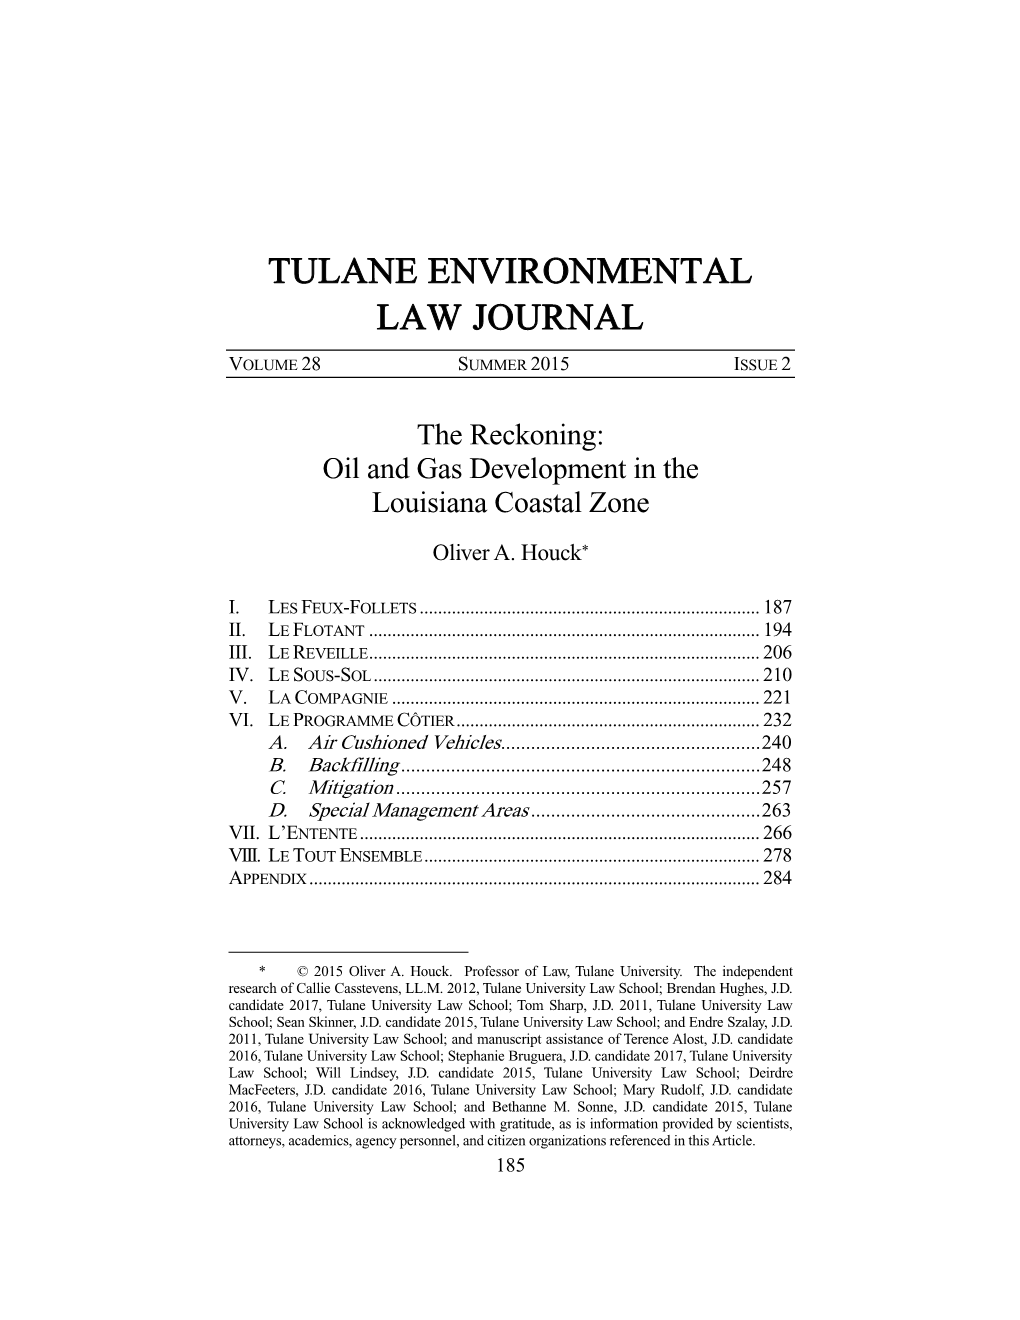 Tulane Environmental Law Journal